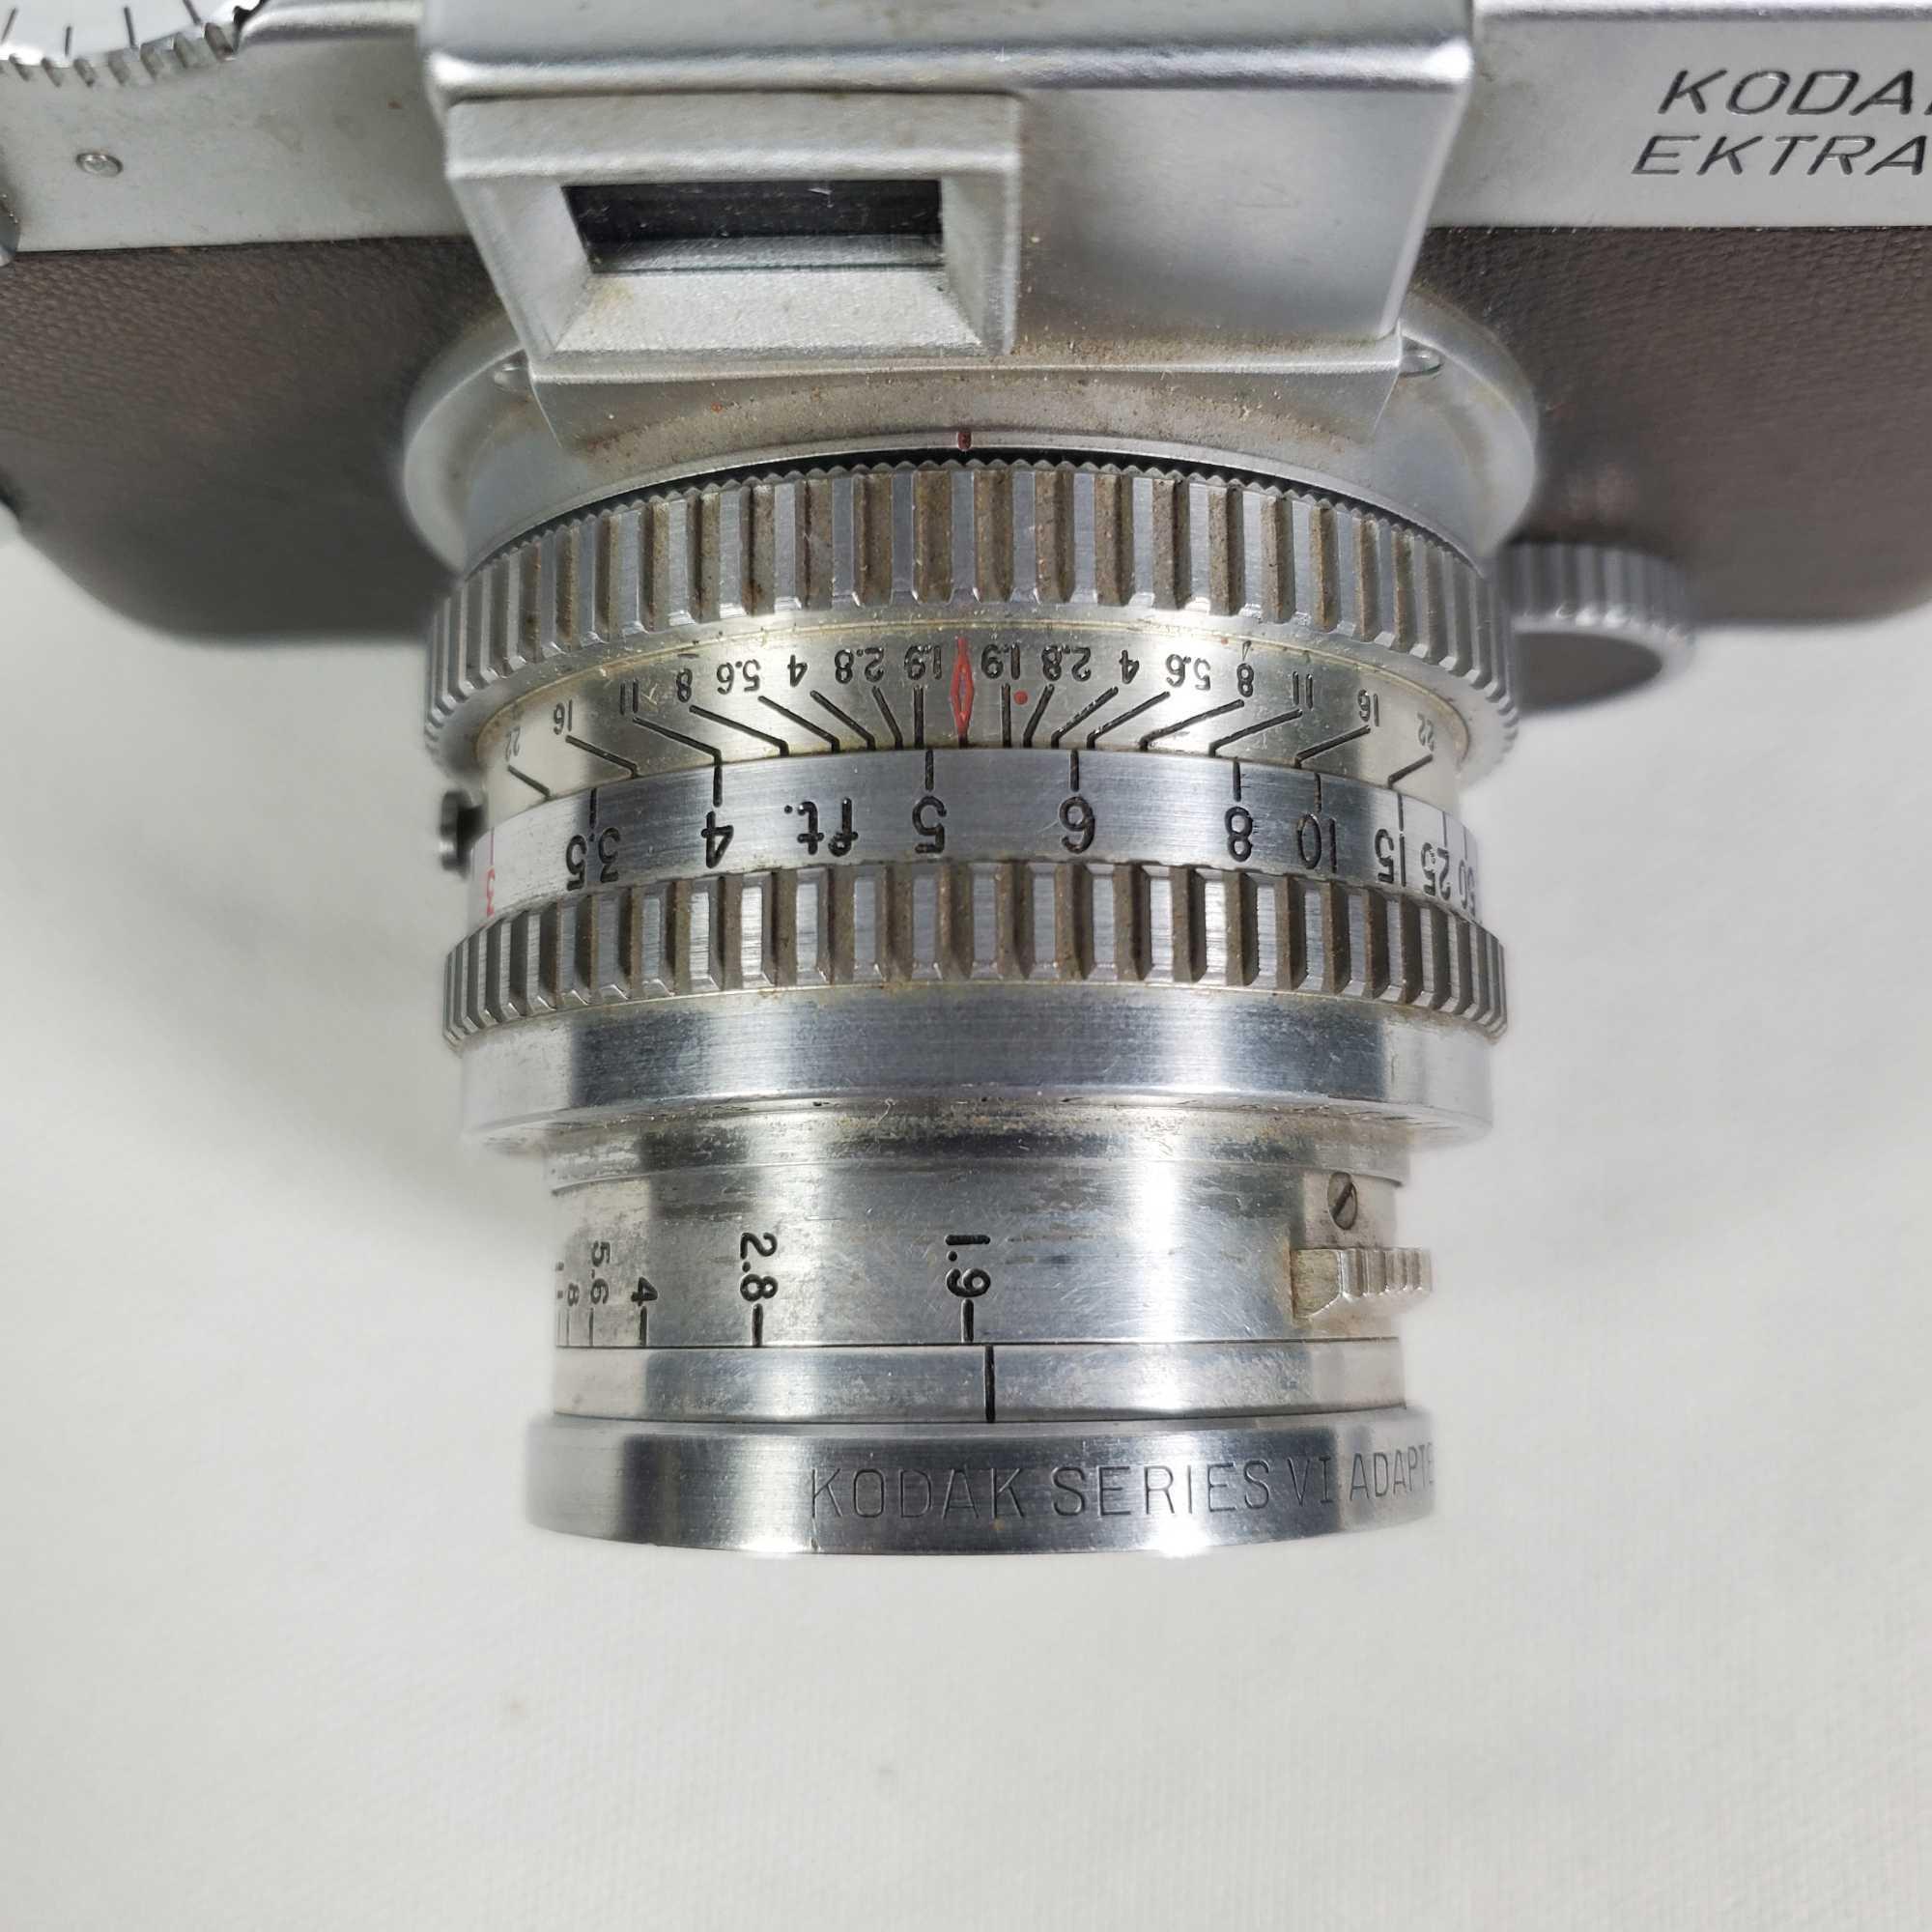 Rare Kodak Ektra 35mm Film Camera With 50mm 1.9 Ektar Lens